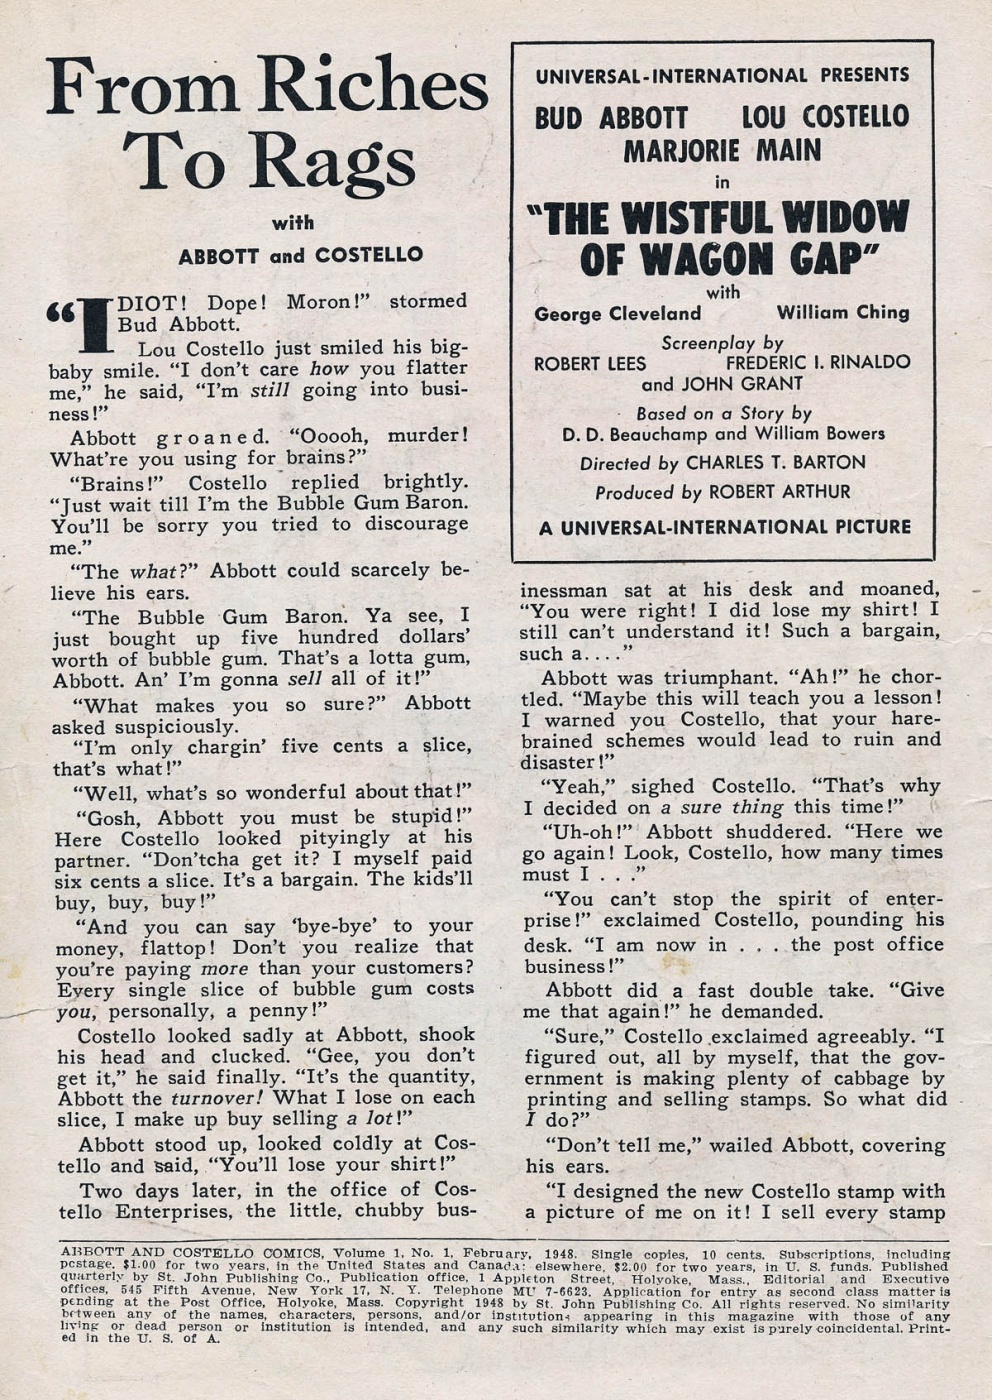 Funny Comic Strips - Abbott and Costello 001 (Feb 1948) 2